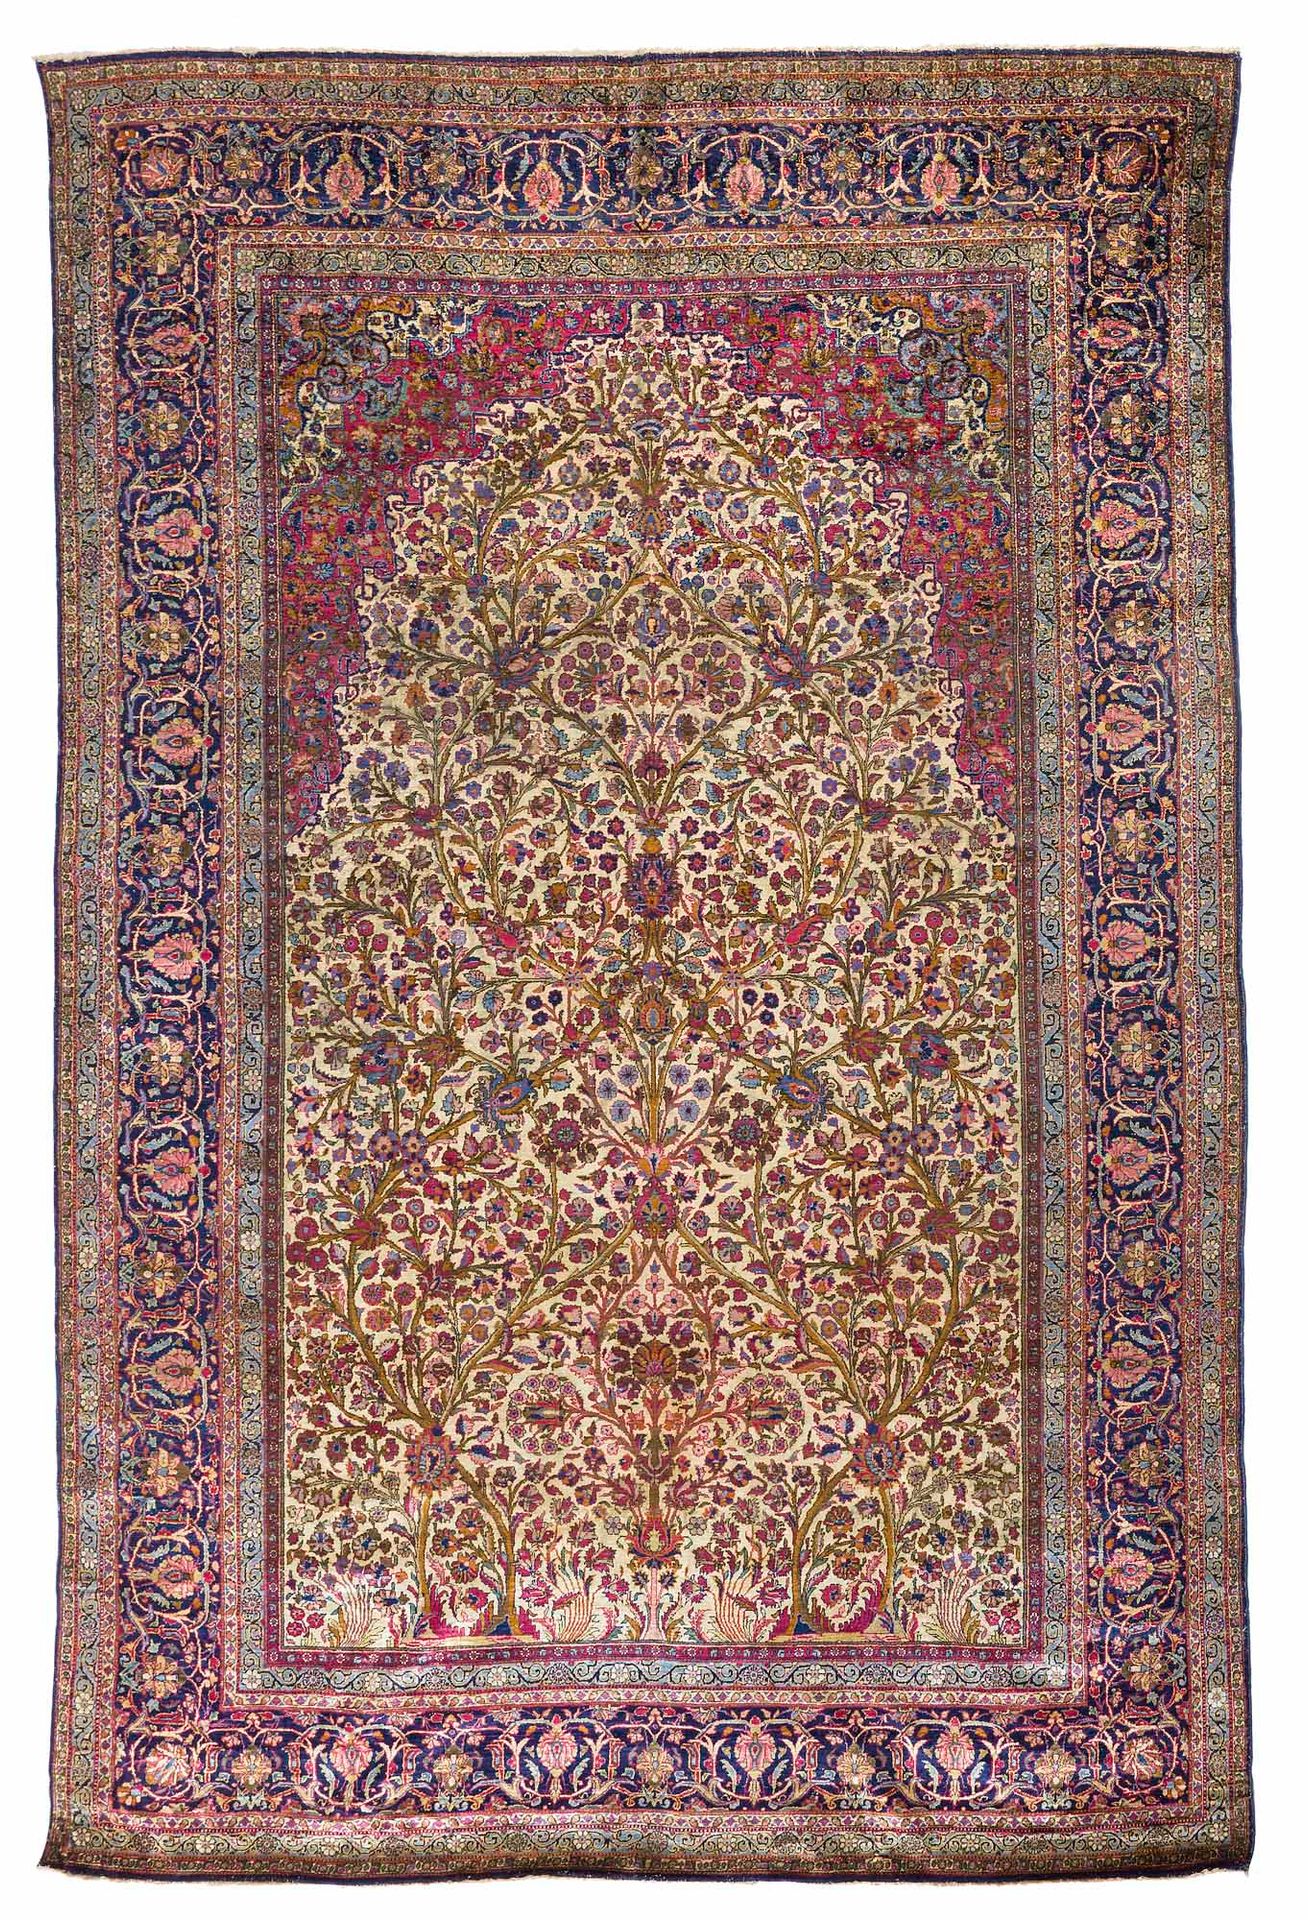 Null Silk KACHAN carpet (Persia), late 19th century

Dimensions : 305 x 210cm.

&hellip;